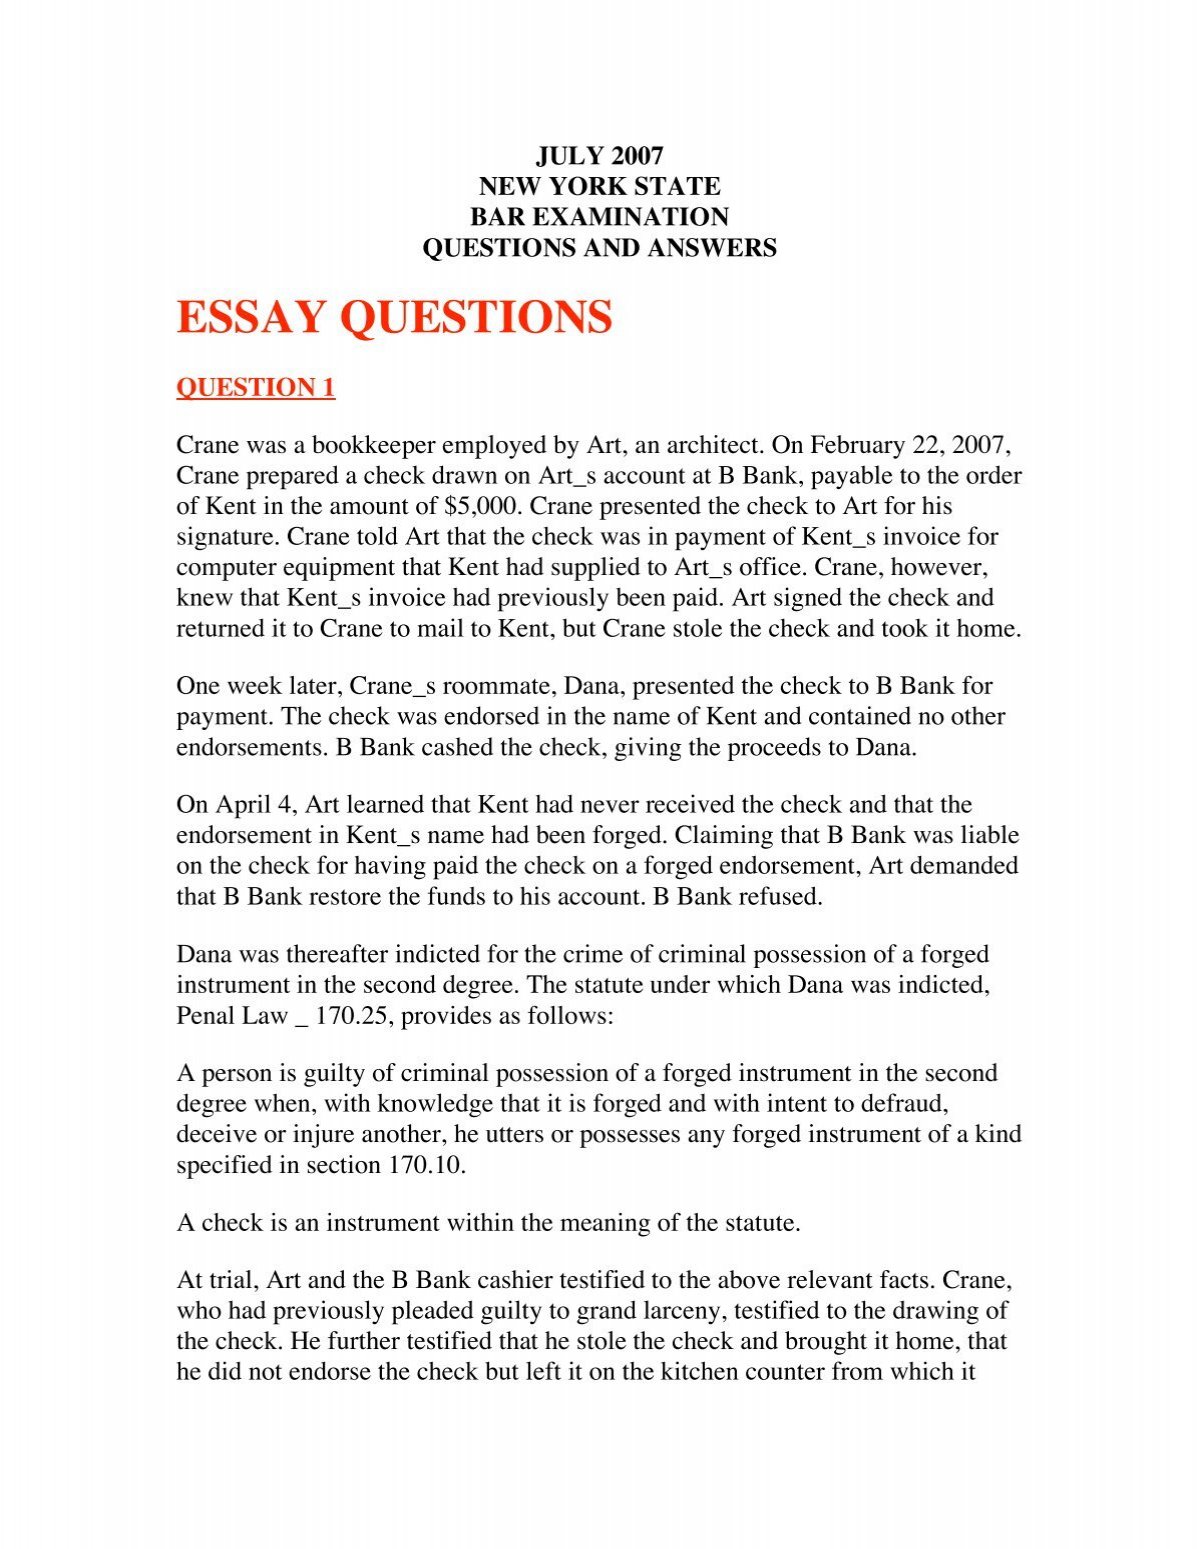 howard university essay requirements